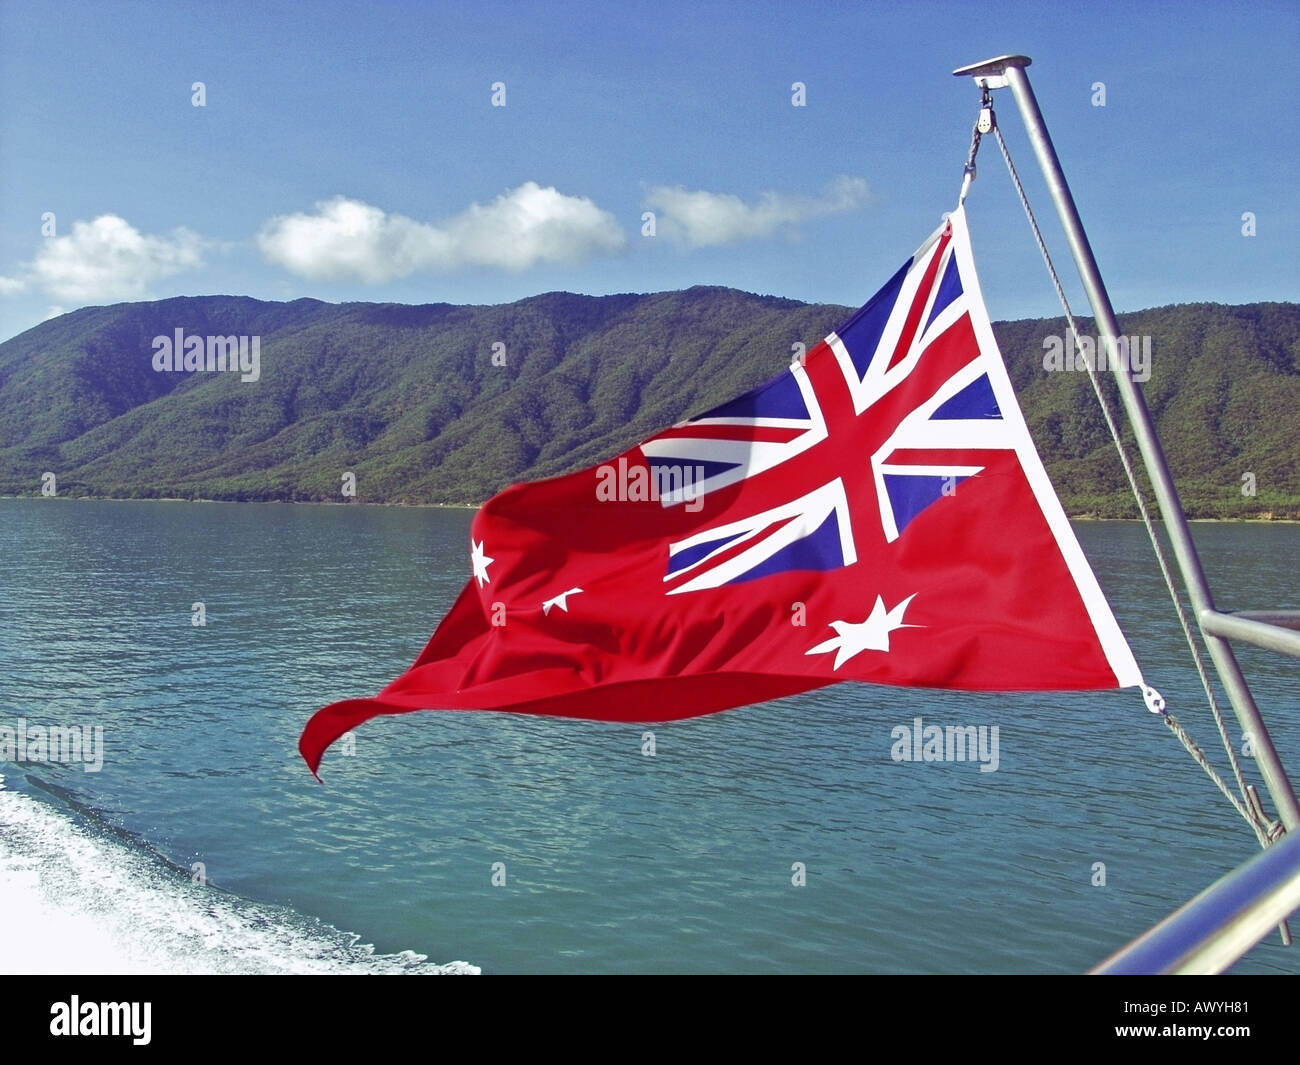 Australia Tropical Queensland flag on stern of catamaran boat on ocean with coastal behind JMH0811 Photo - Alamy